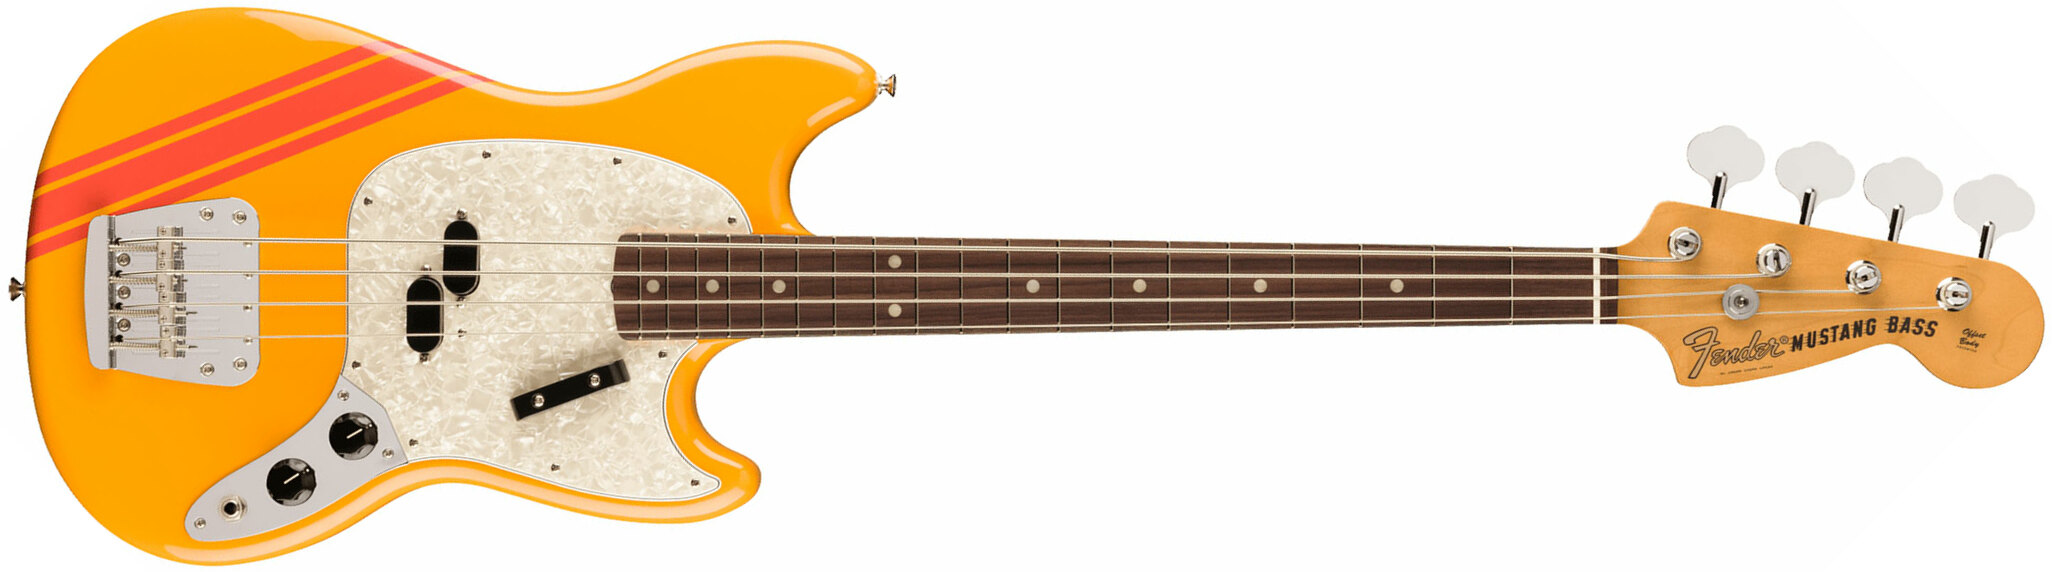 Fender Mustang Bass 70s Competition Vintera 2 Rw - Competition Orange - Basse Électrique Solid Body - Main picture